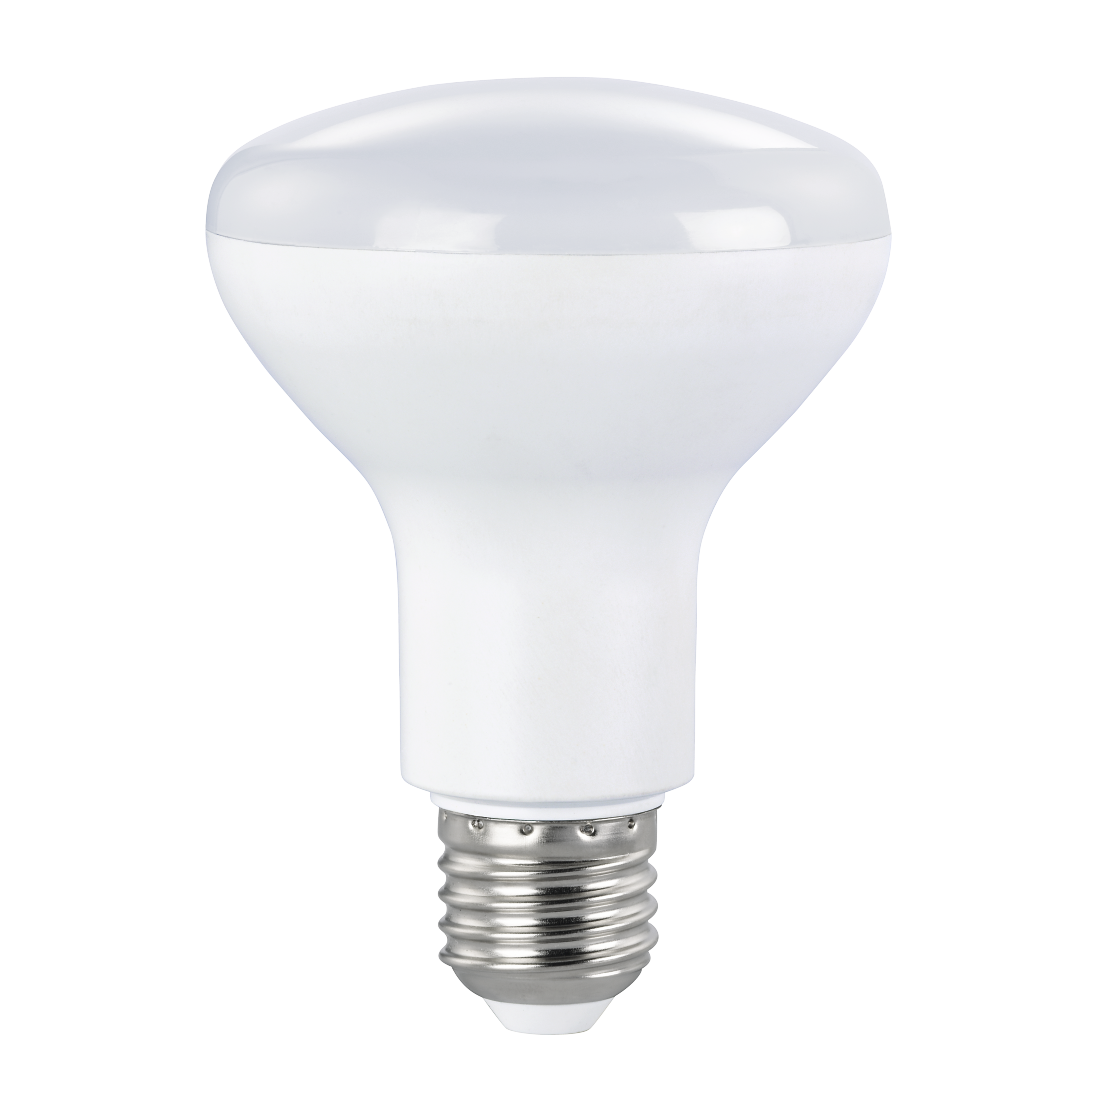 abx Druckfähige Abbildung - Xavax, LED-Lampe, E27, 1050lm ersetzt 75W, Reflektorlampe R80, Warmweiß